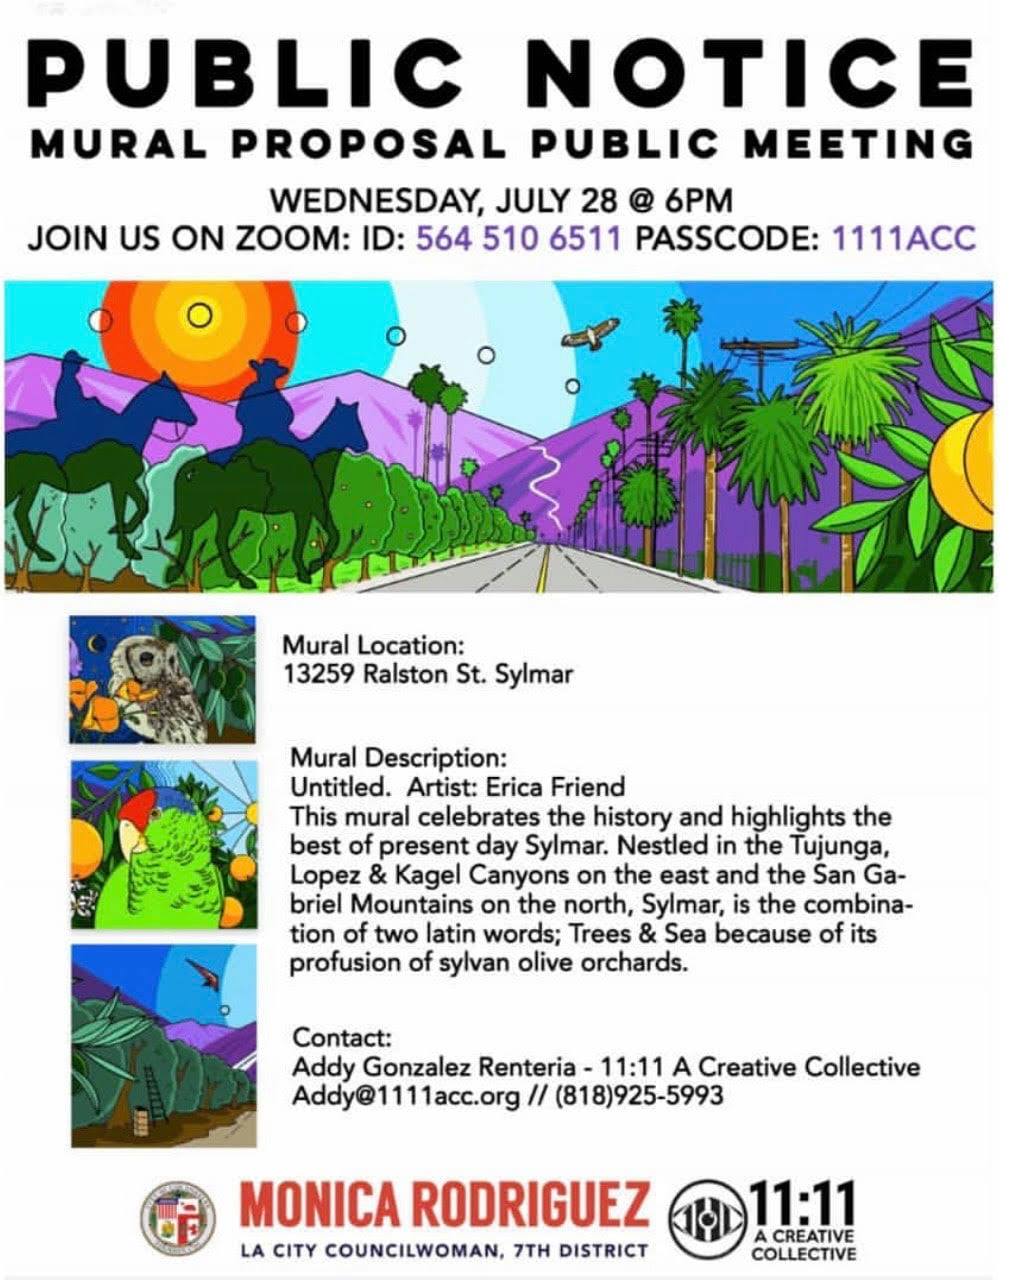 Public Notice - Mural Proposal Public Meeting 